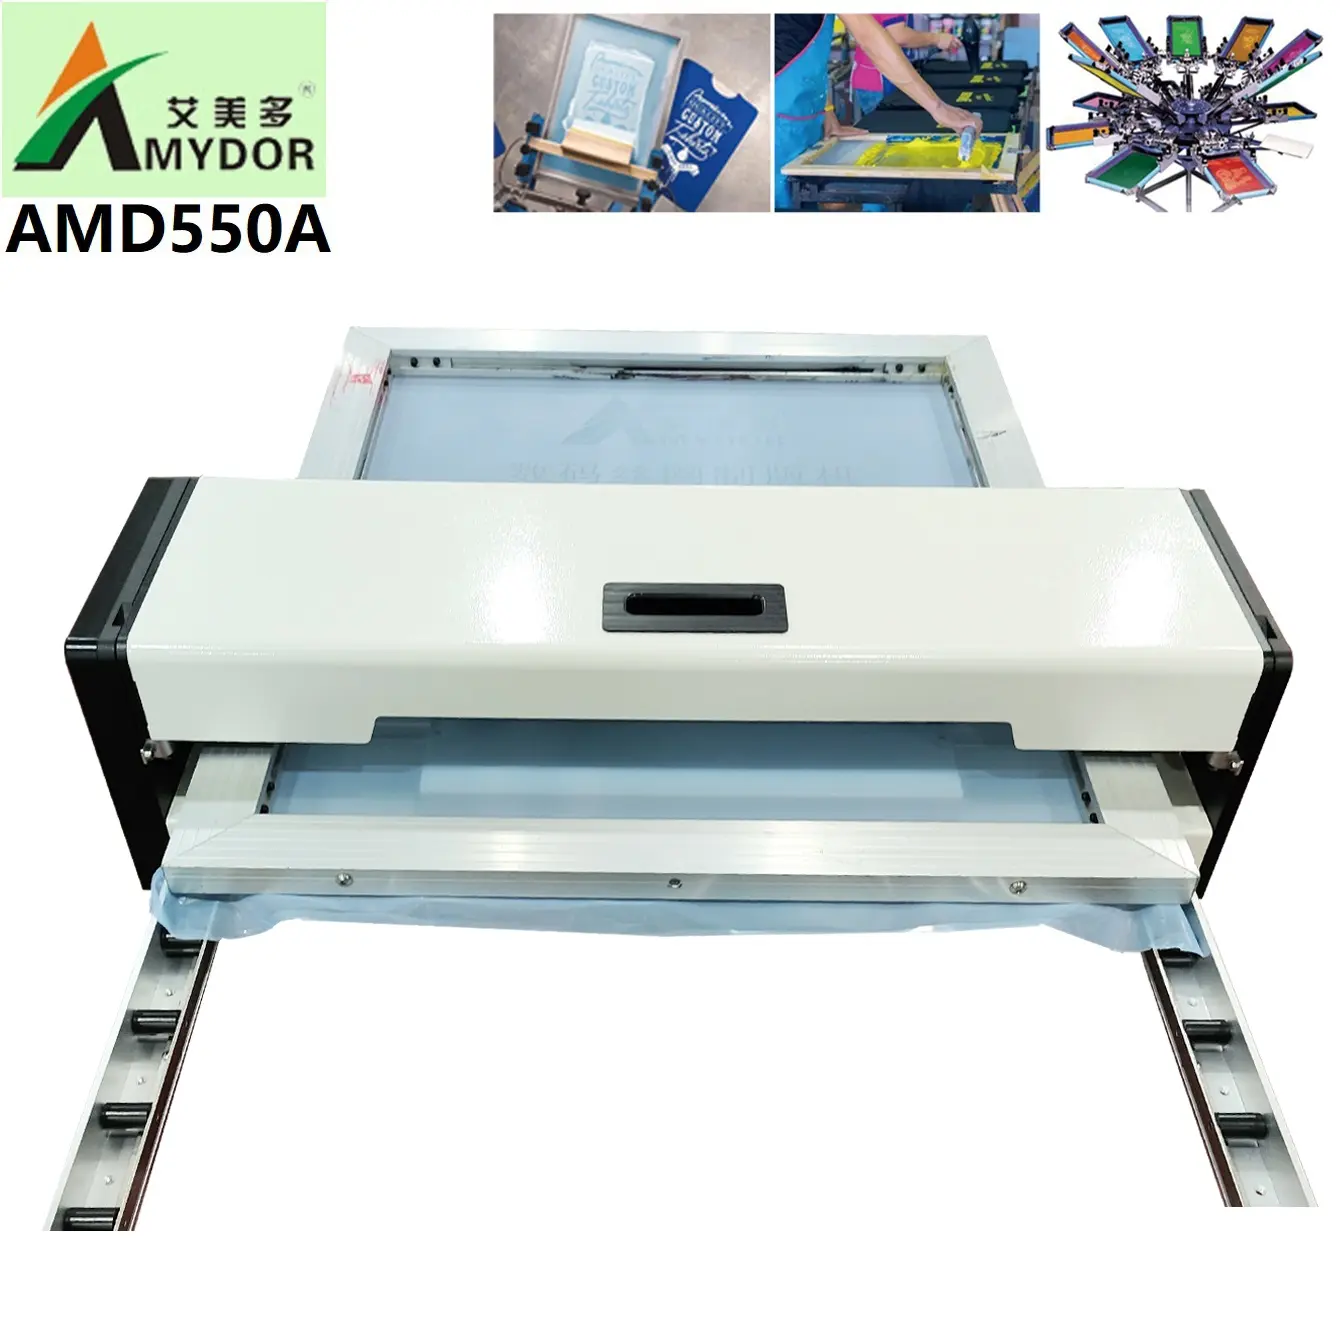 Amydor AMD550A Factory direct supply silk screen printing screen printer, no need emulsion and chemicals